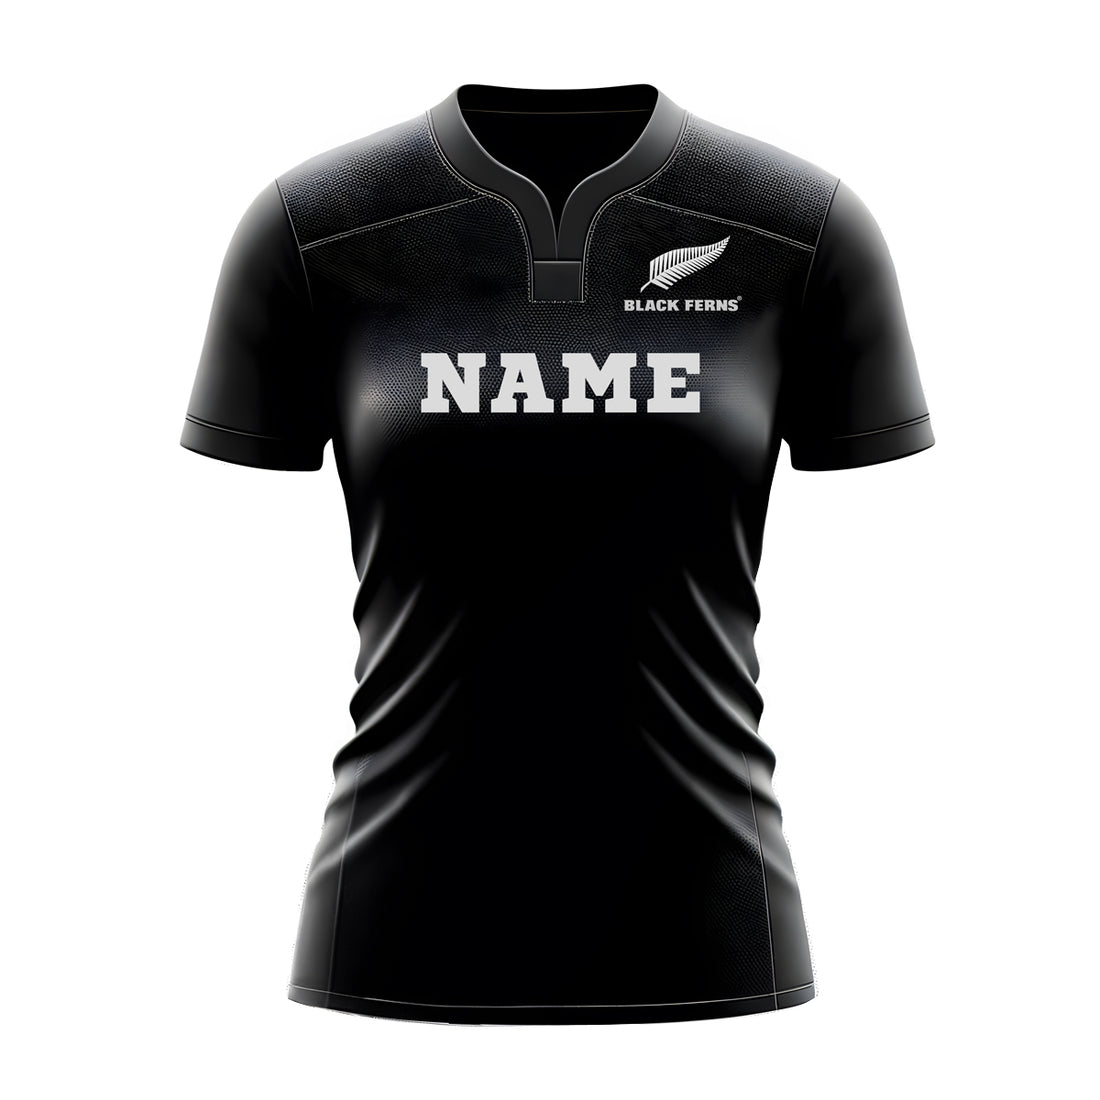 Black Ferns Rugby Shirt wall decal